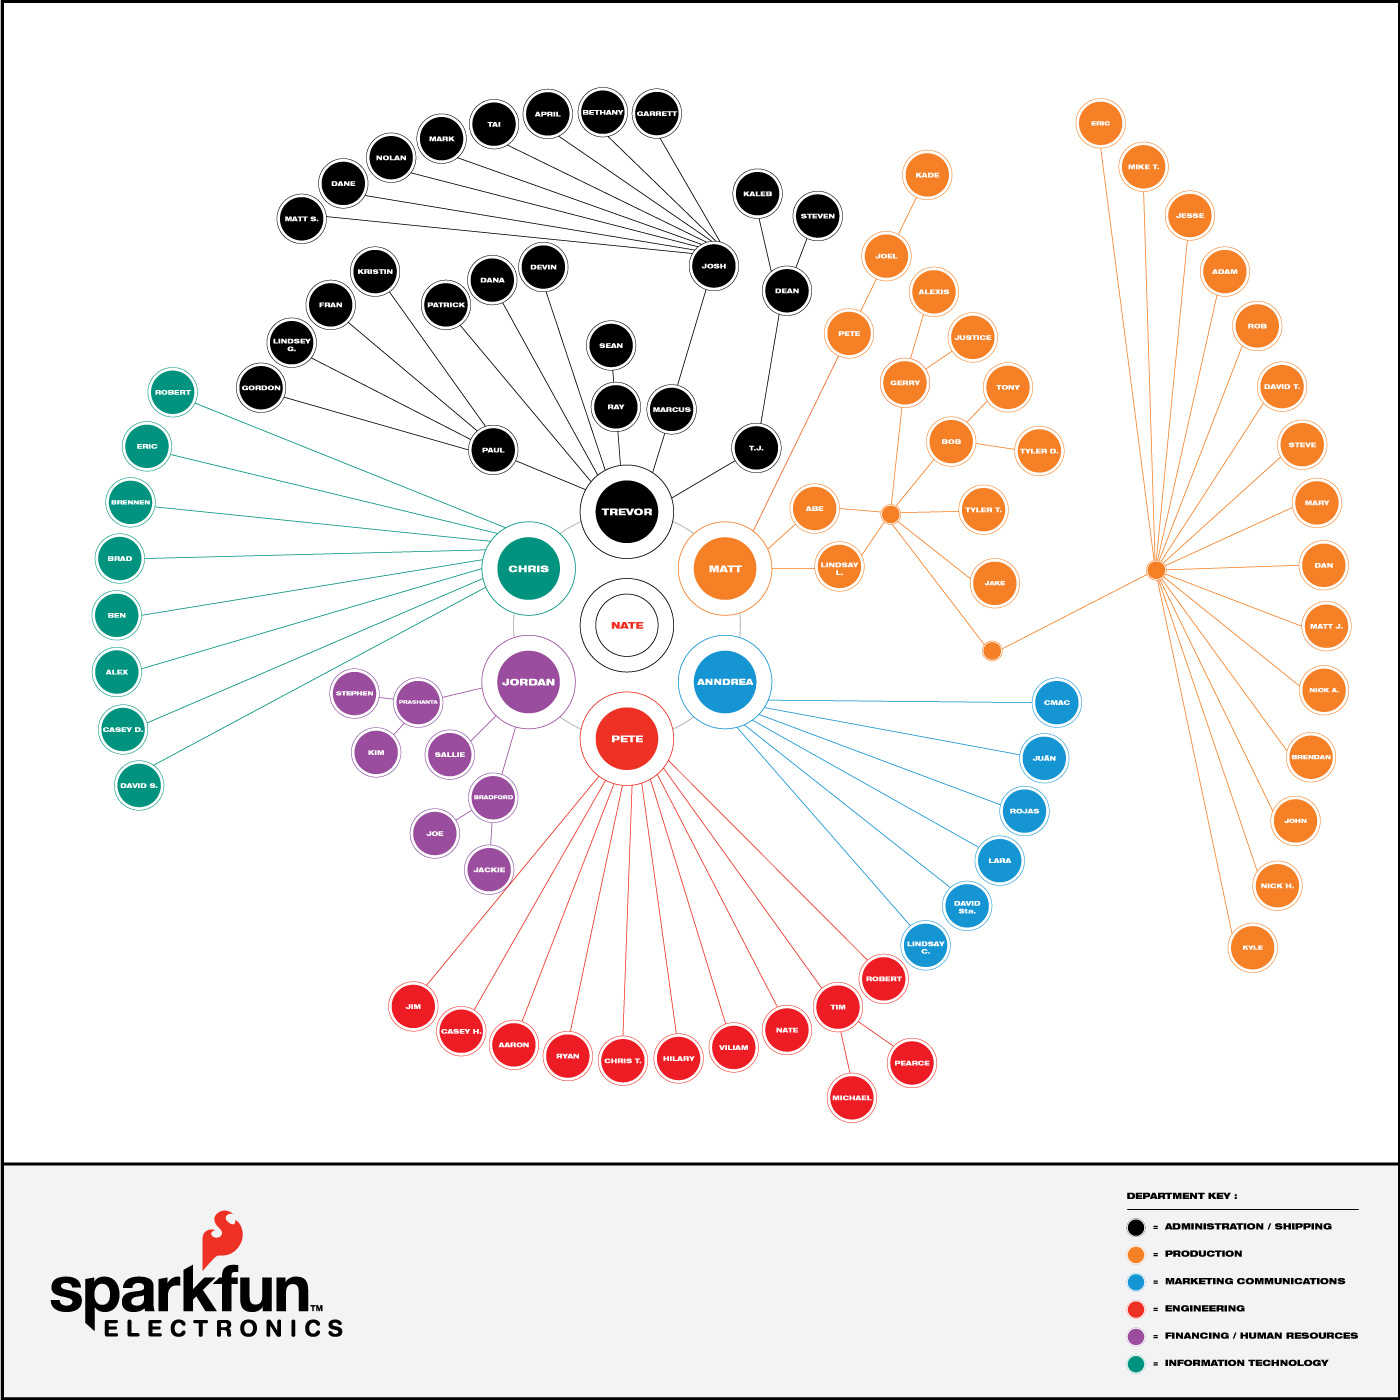 Organizational Chart Ideas